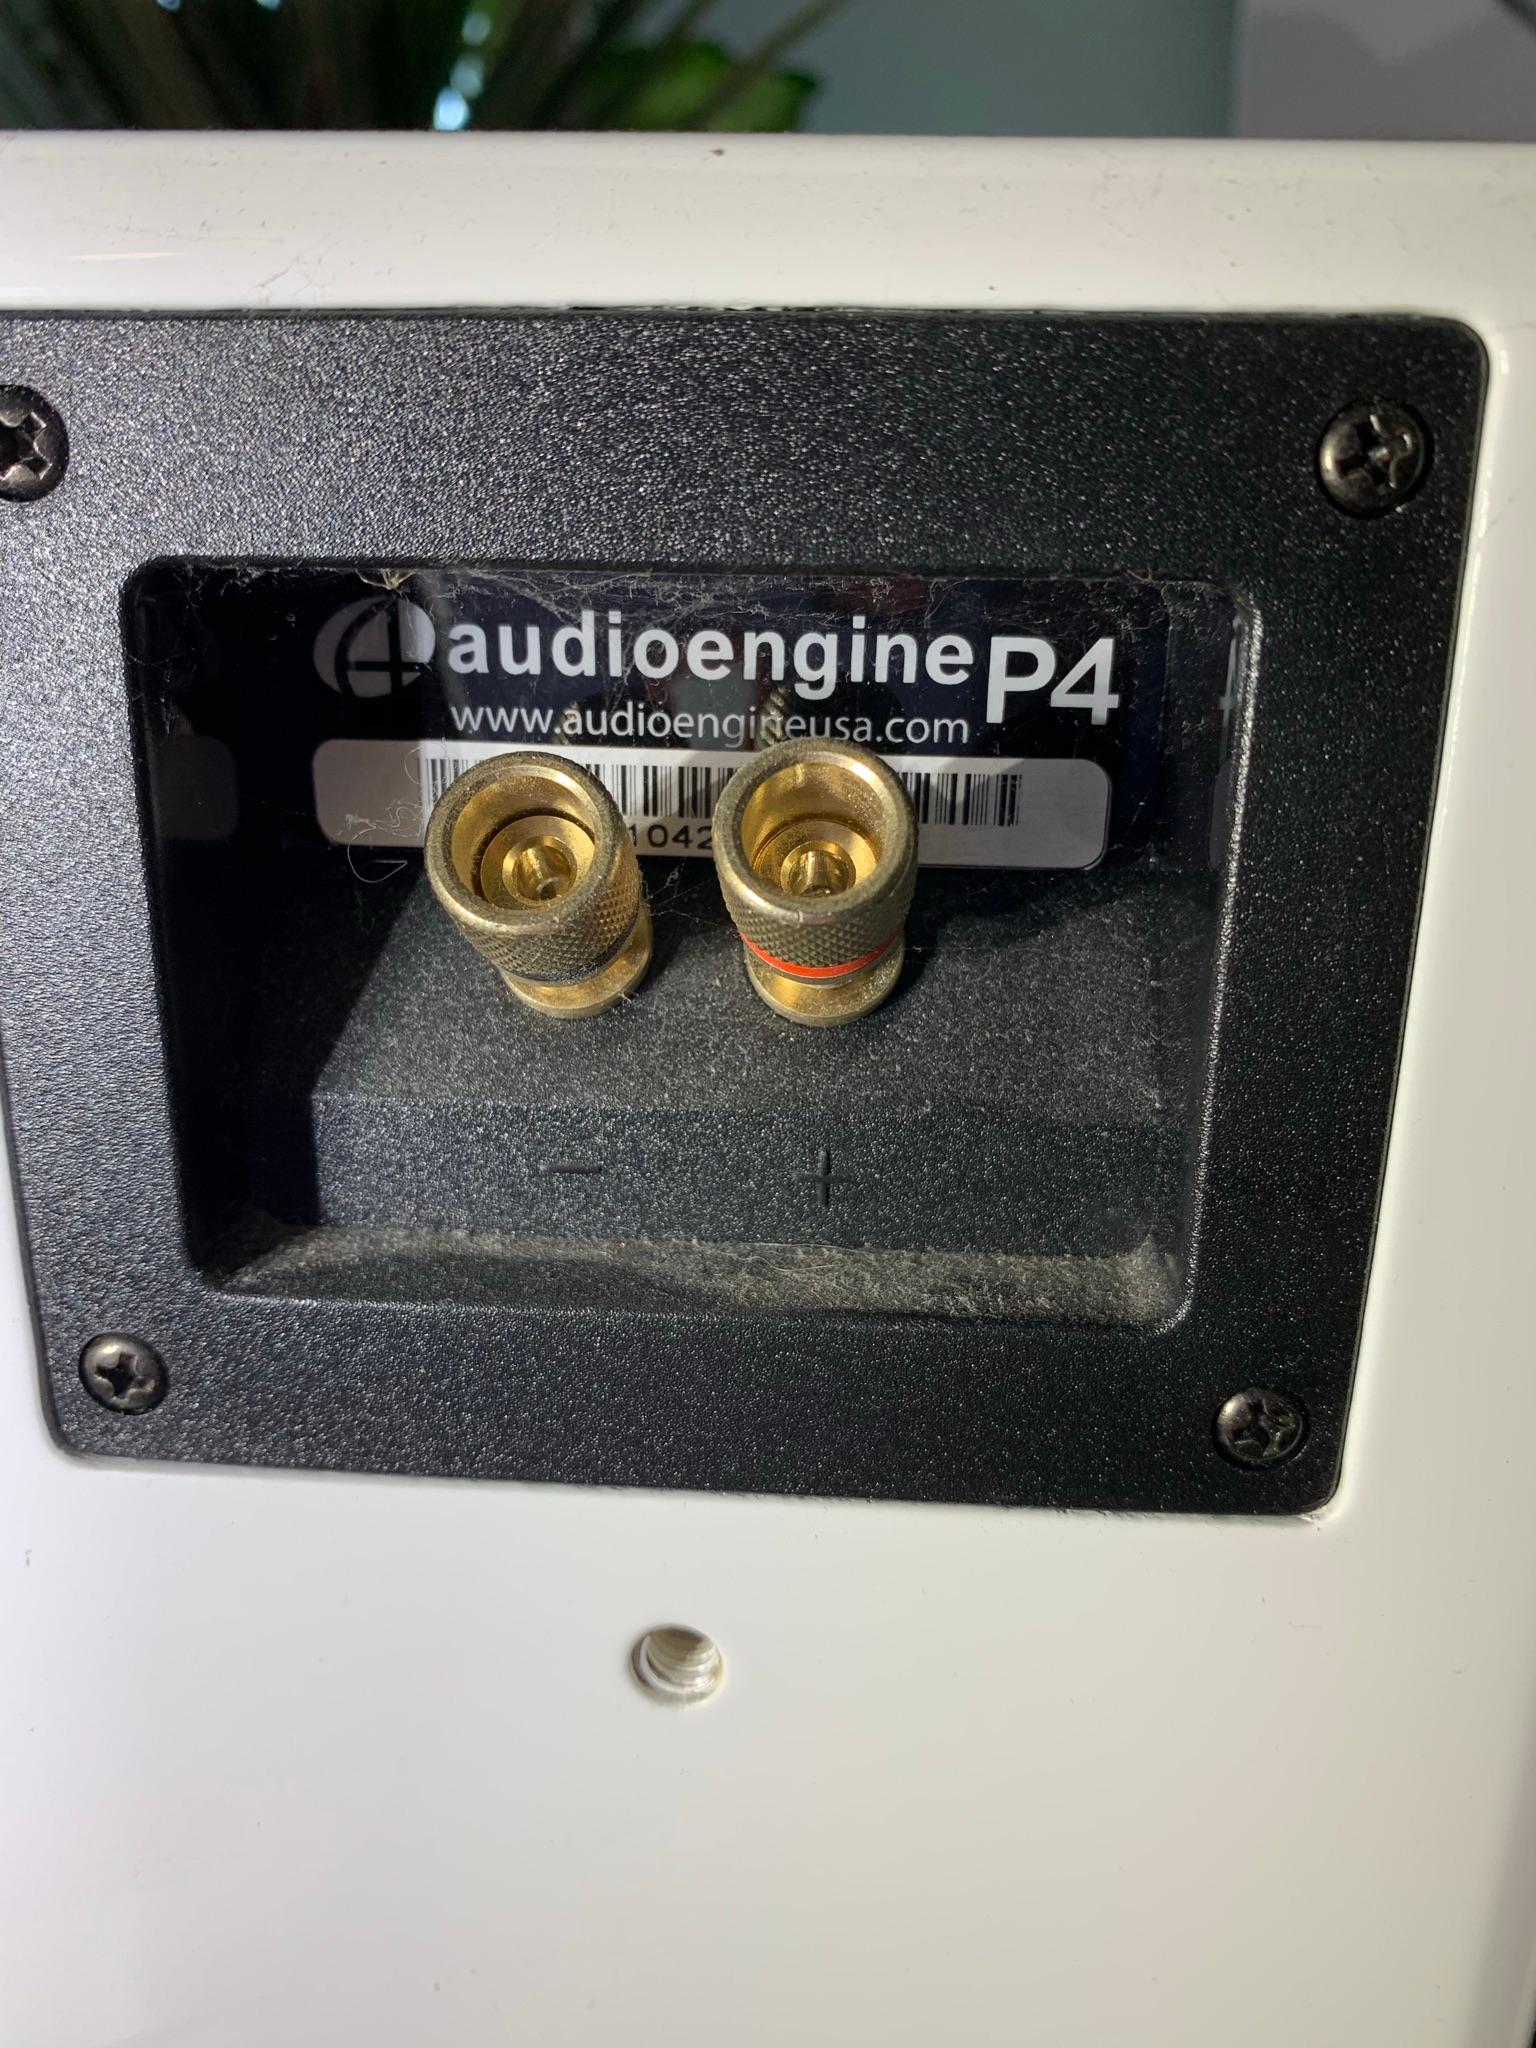 Marantz Amplifier - PM5005 & 2 Audioengine P4 Speakers